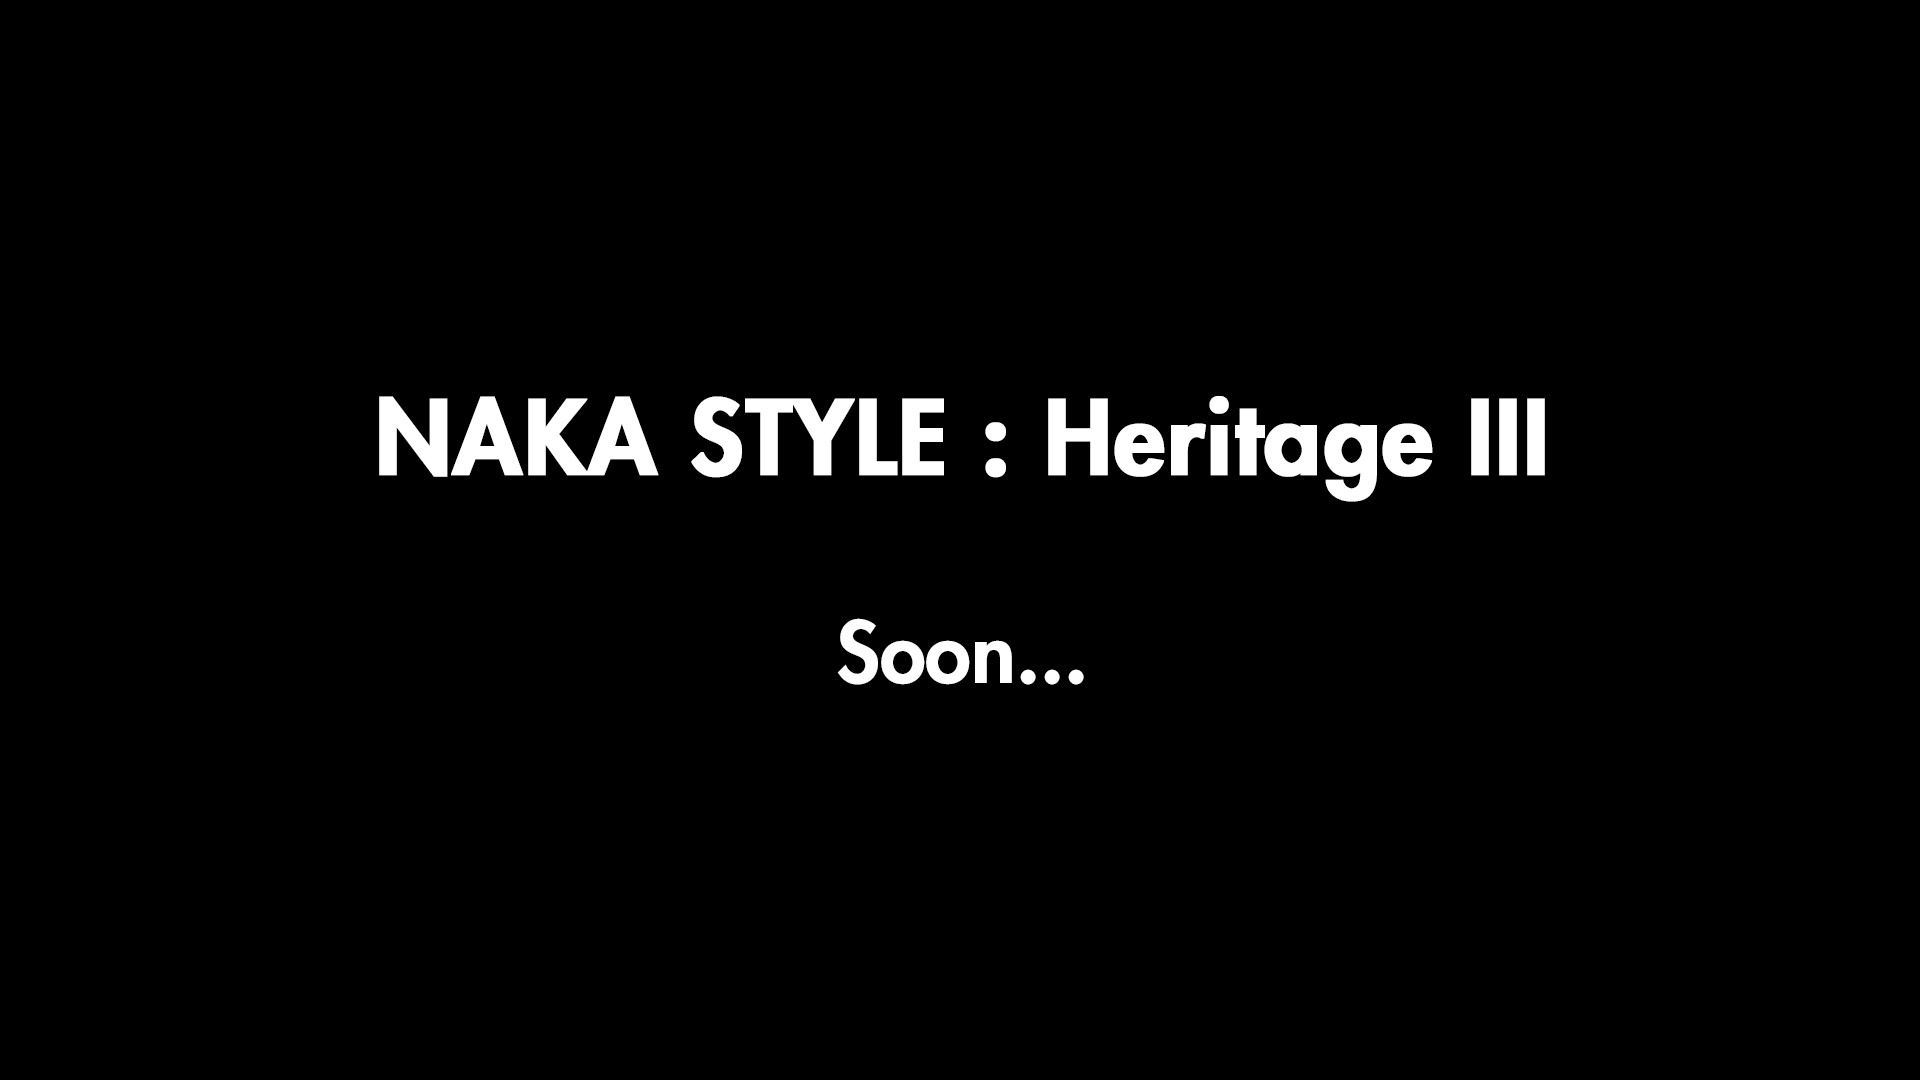 Naka style : Heritage 3 by Docvale